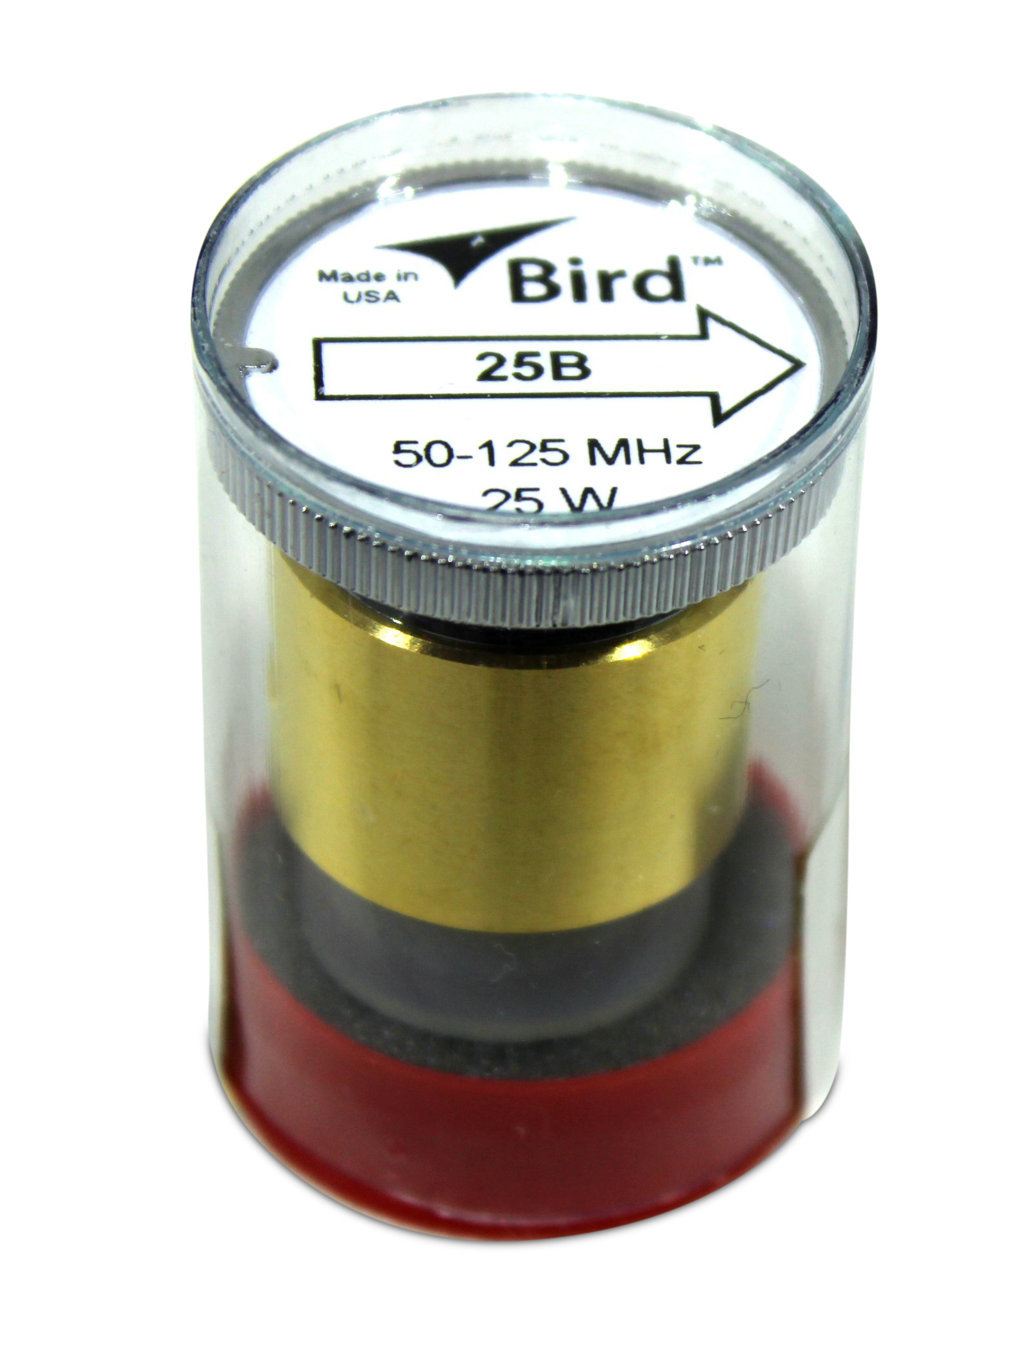 Bird Electronic - Bird Element 25B 25W 50-125 MHz #BRD-25B